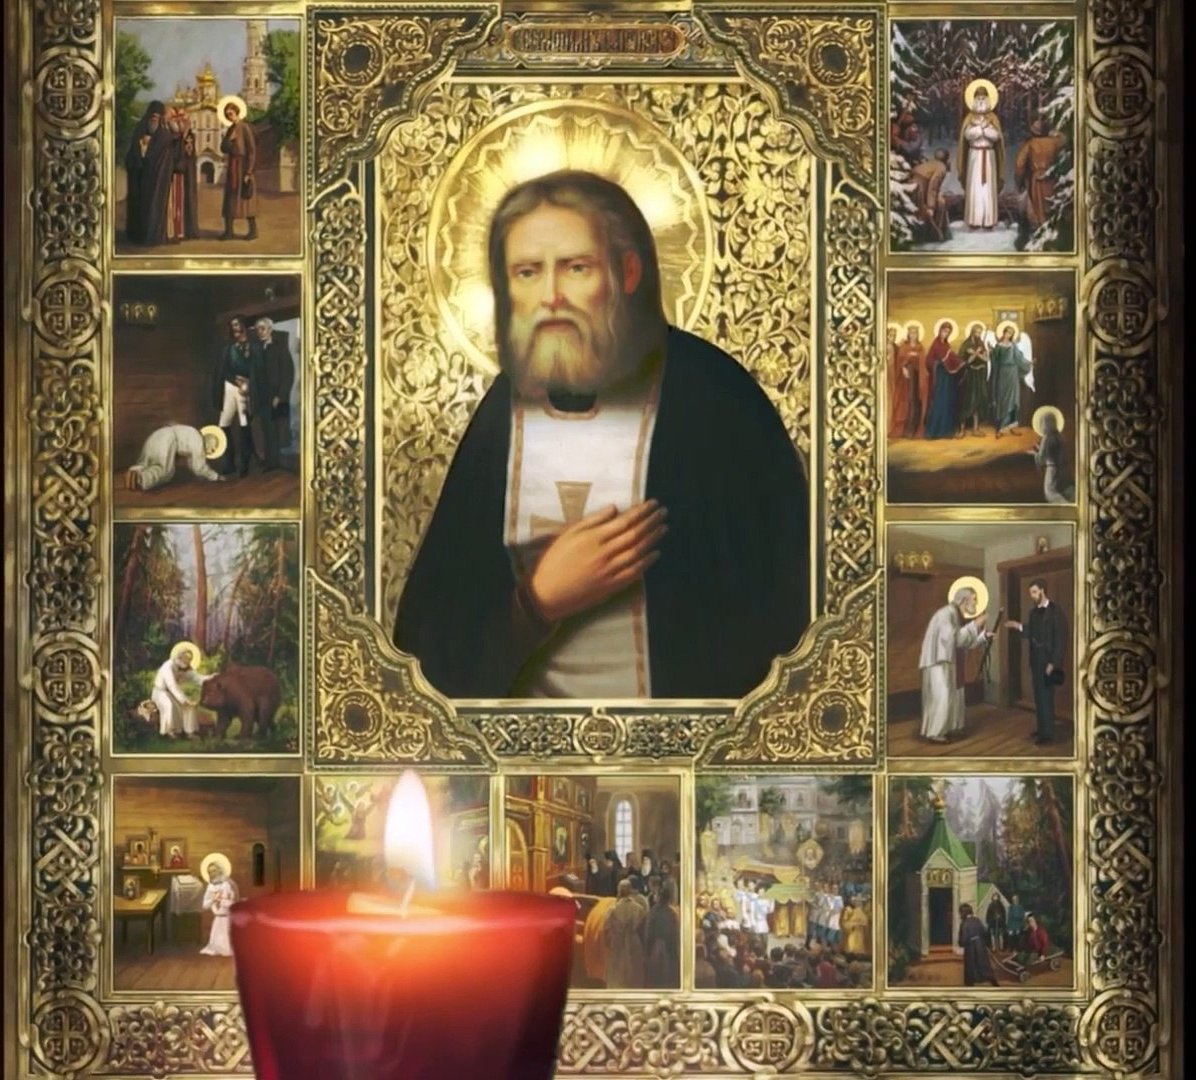 zCinéma2 icône saint Séraphin de Sarov.jpeg